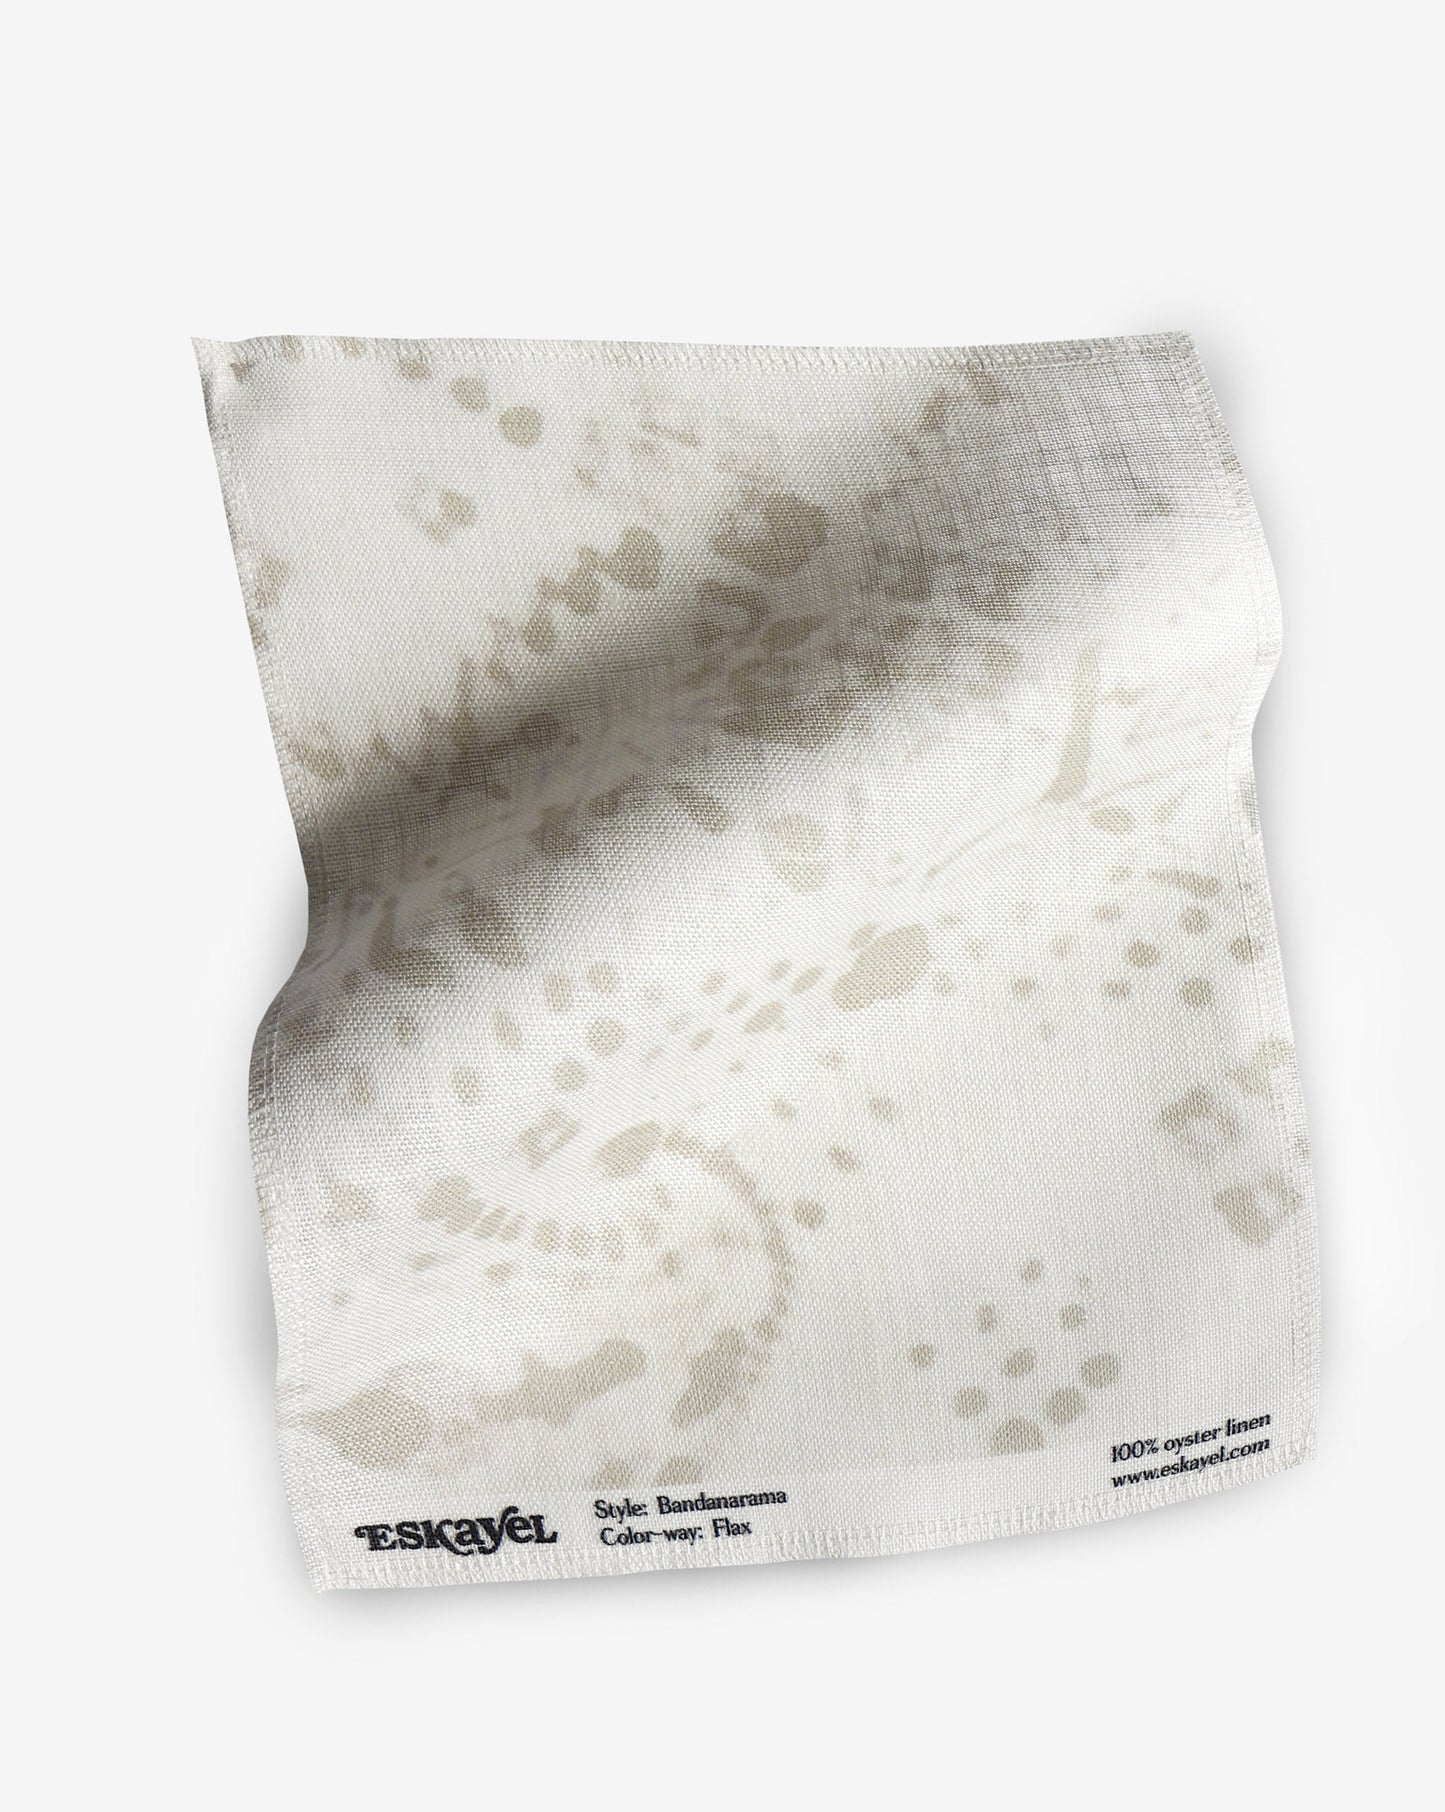 A Bandanarama Fabric Sample||Flax towel with a pattern on it.